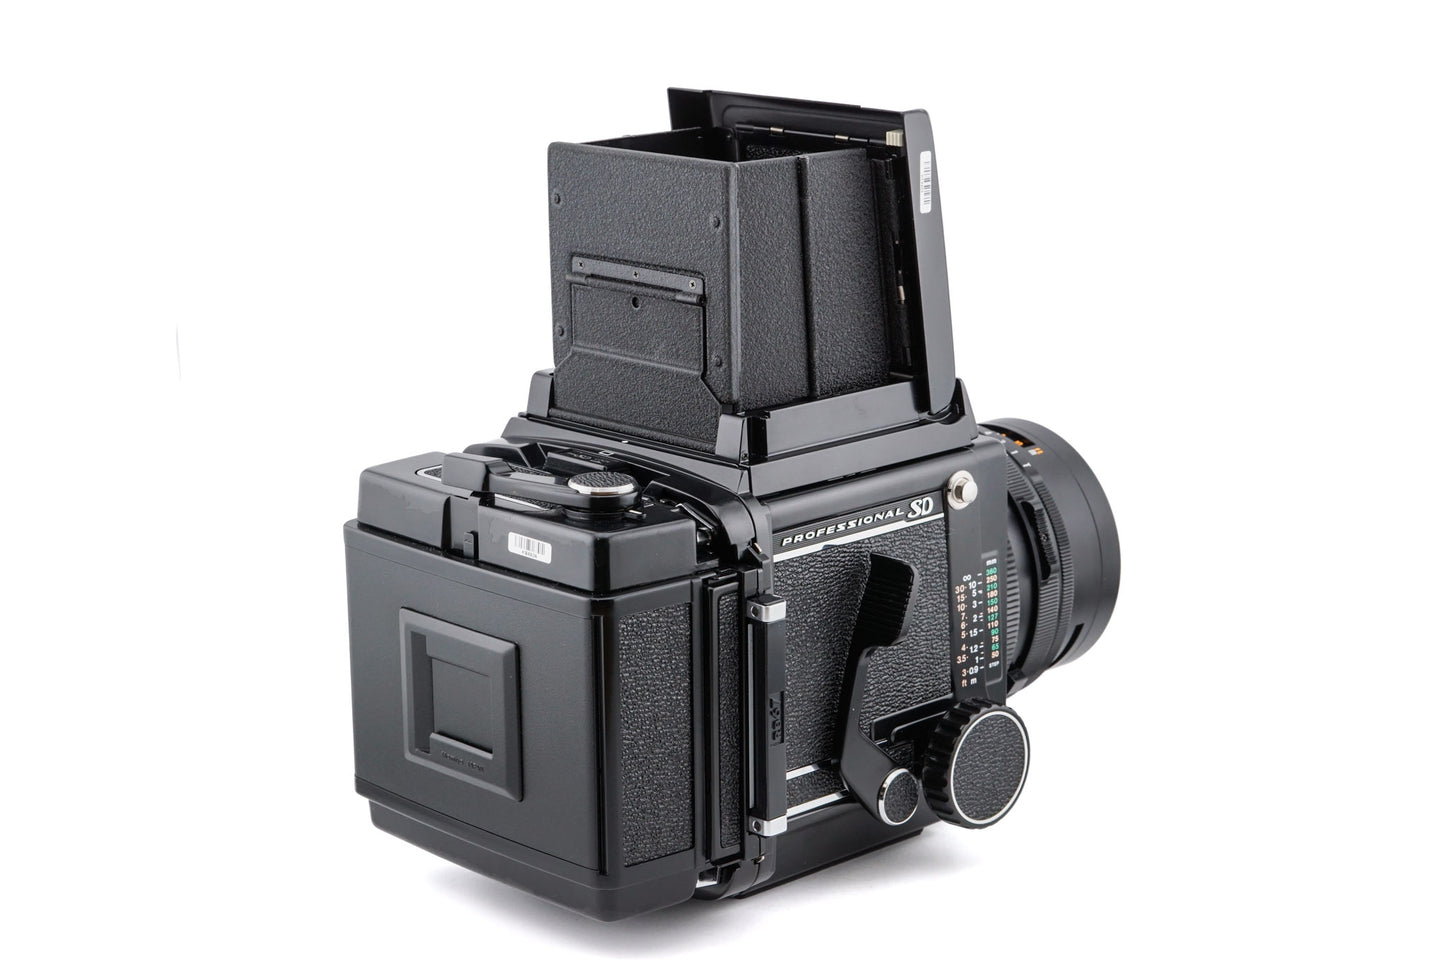 Mamiya RB67 Pro SD + 127mm f3.8 Sekor C + 120 Pro-SD 6x7 Film Back + Waist Level Finder